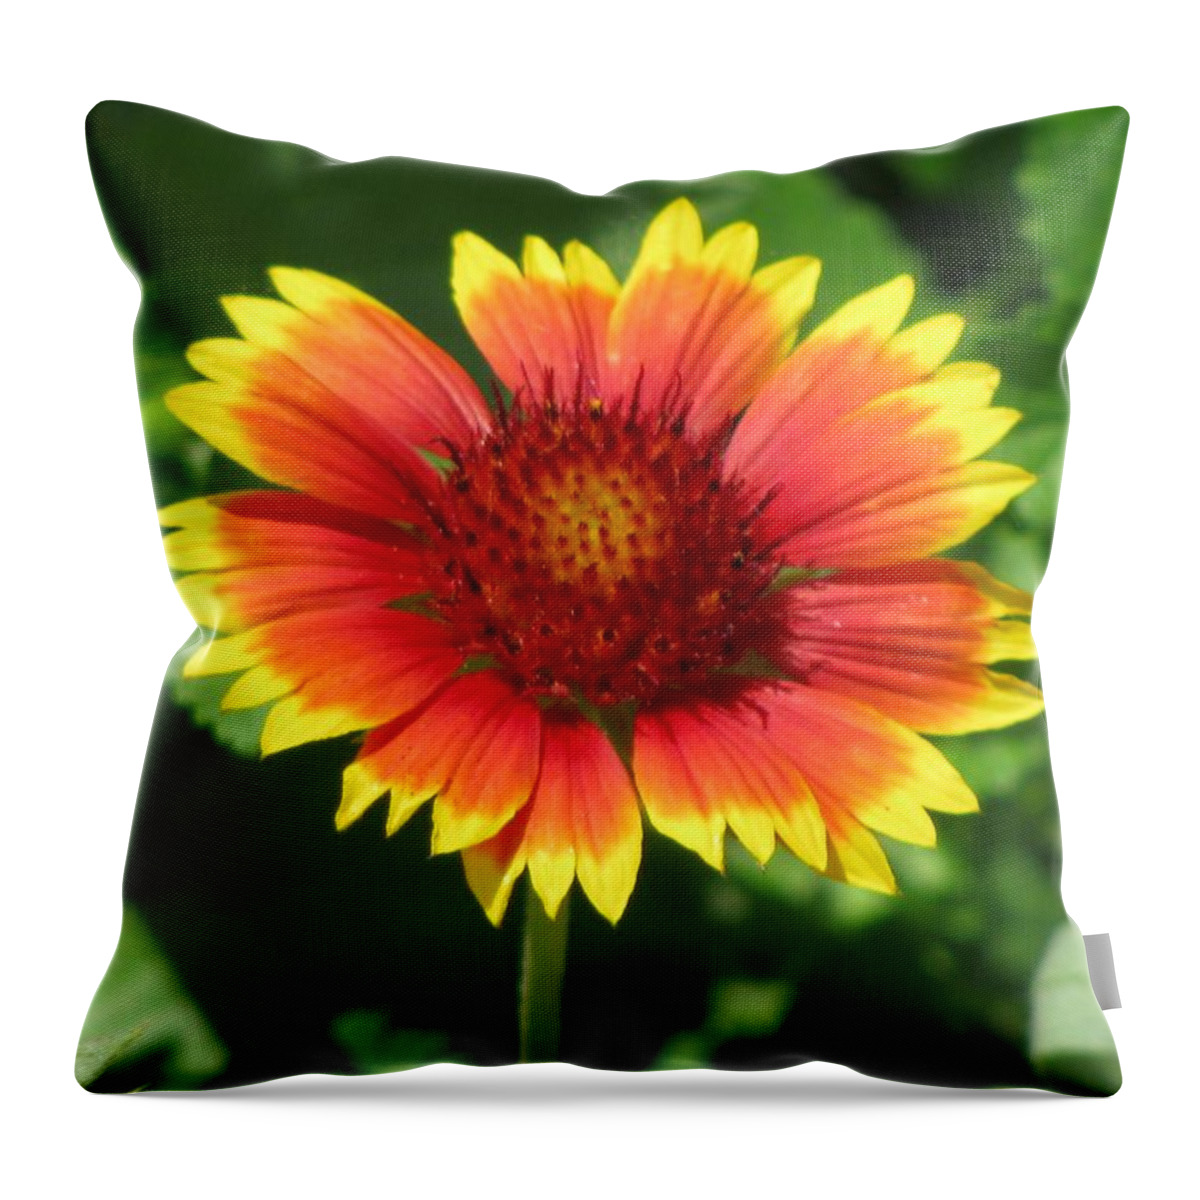 Flower Throw Pillow featuring the photograph Sunburst 03 by Pamela Critchlow